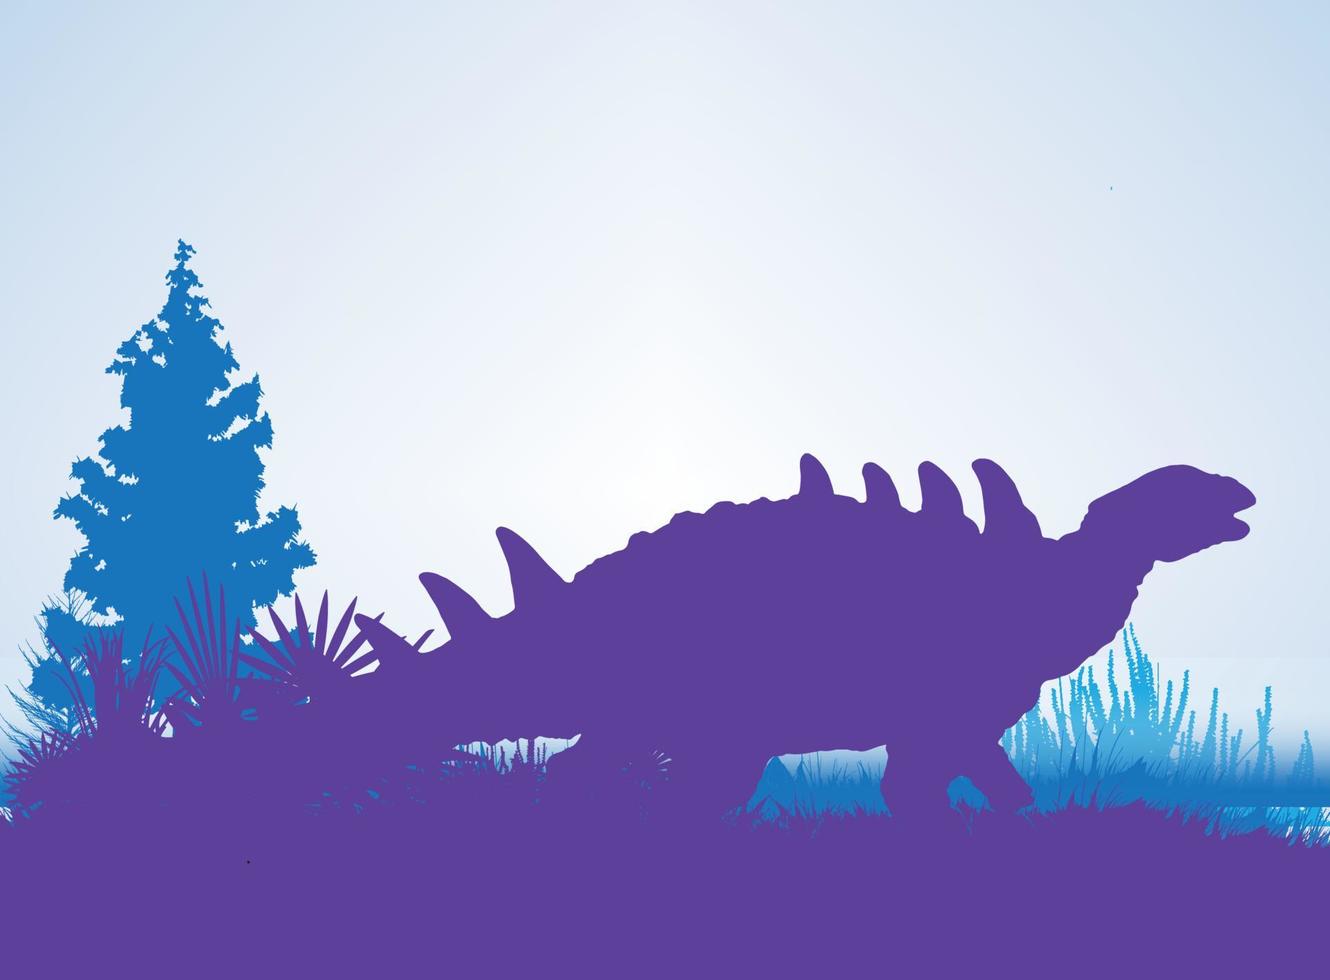 siluetas de dinosaurios polacanthus en un entorno prehistórico capas superpuestas fondo decorativo banner ilustración vectorial abstracta vector